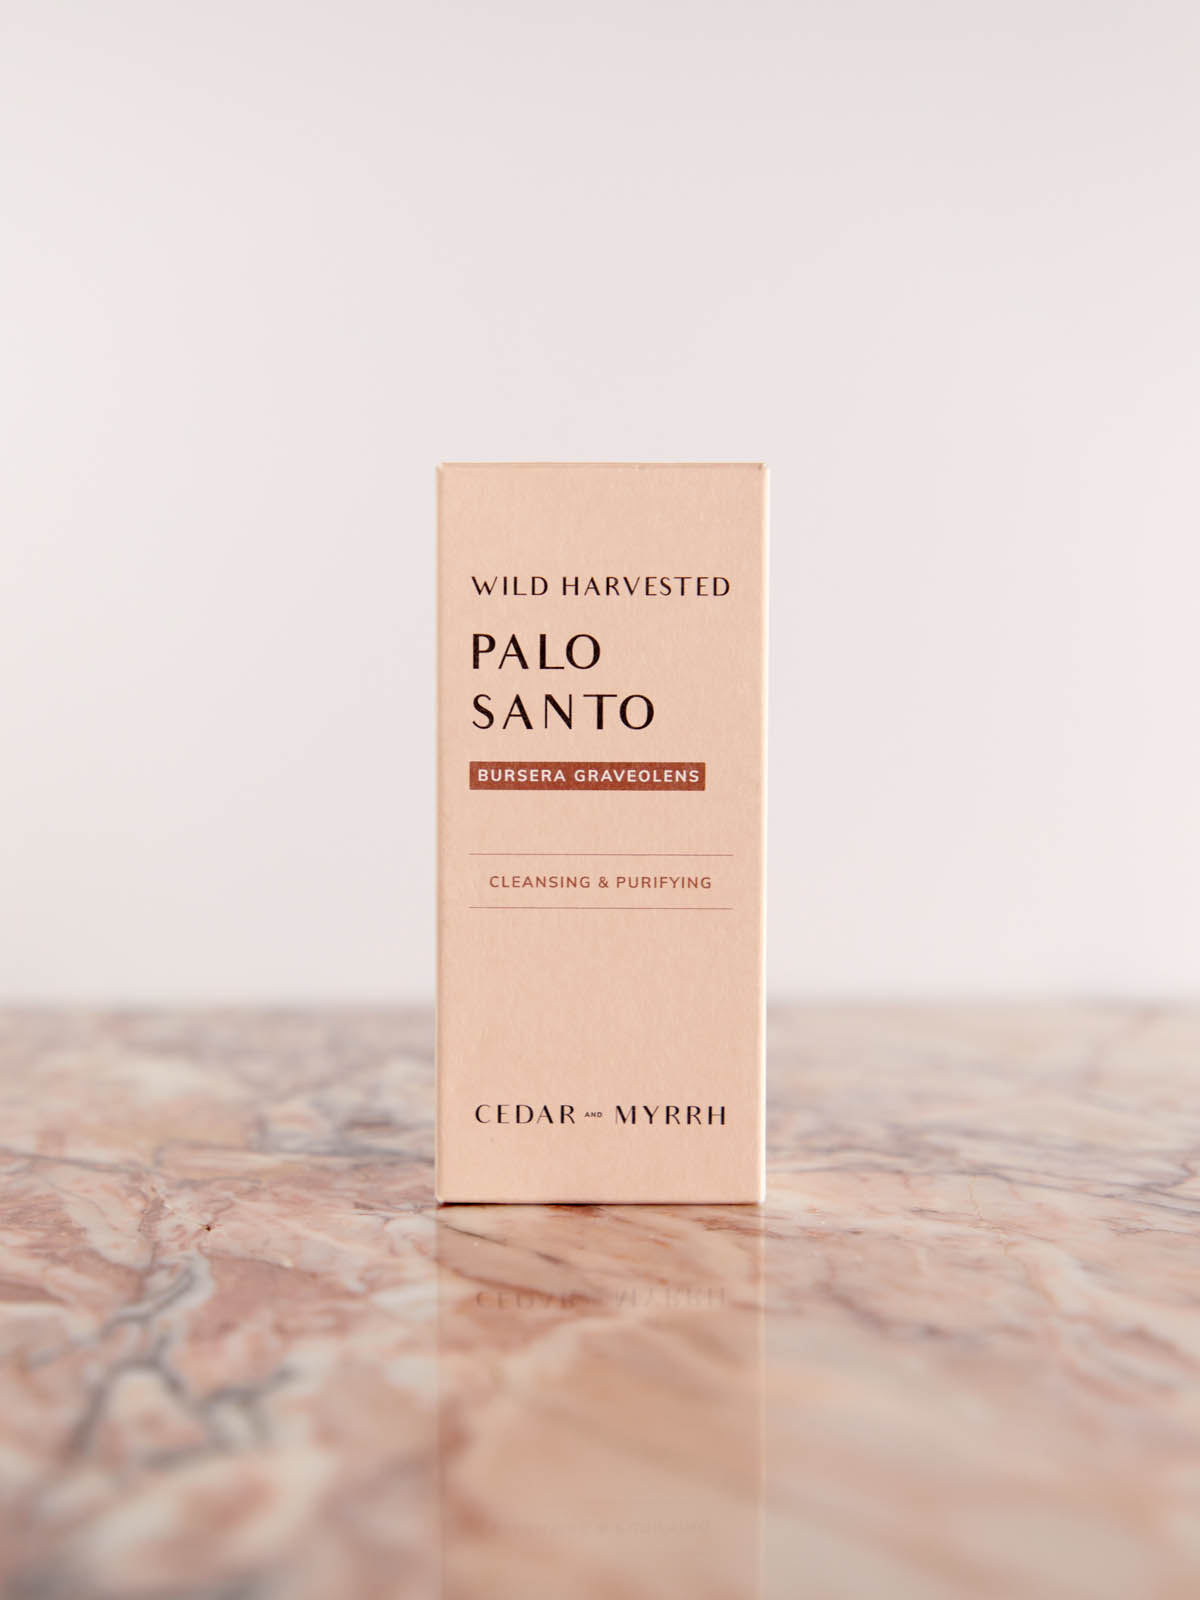 Sacred Palo Santo Sticks from Peru by Cedar & Myrrh box on pink marble